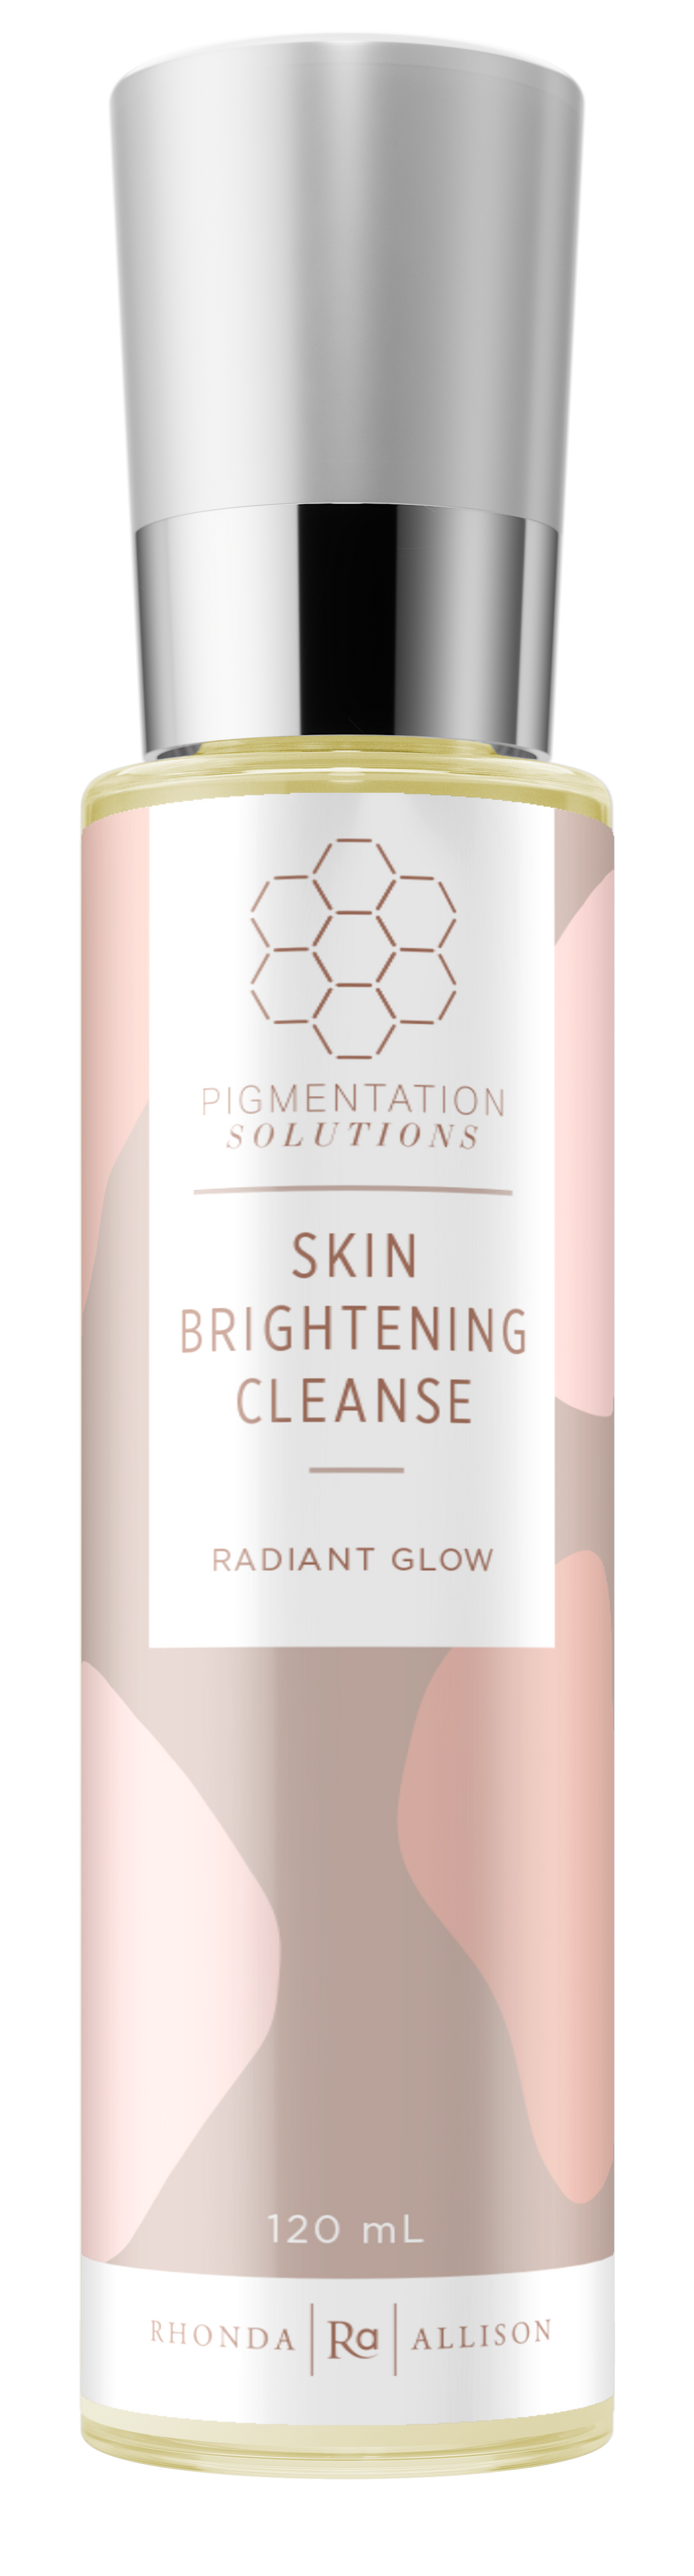 Skin Brightening Cleanse - 120 mL